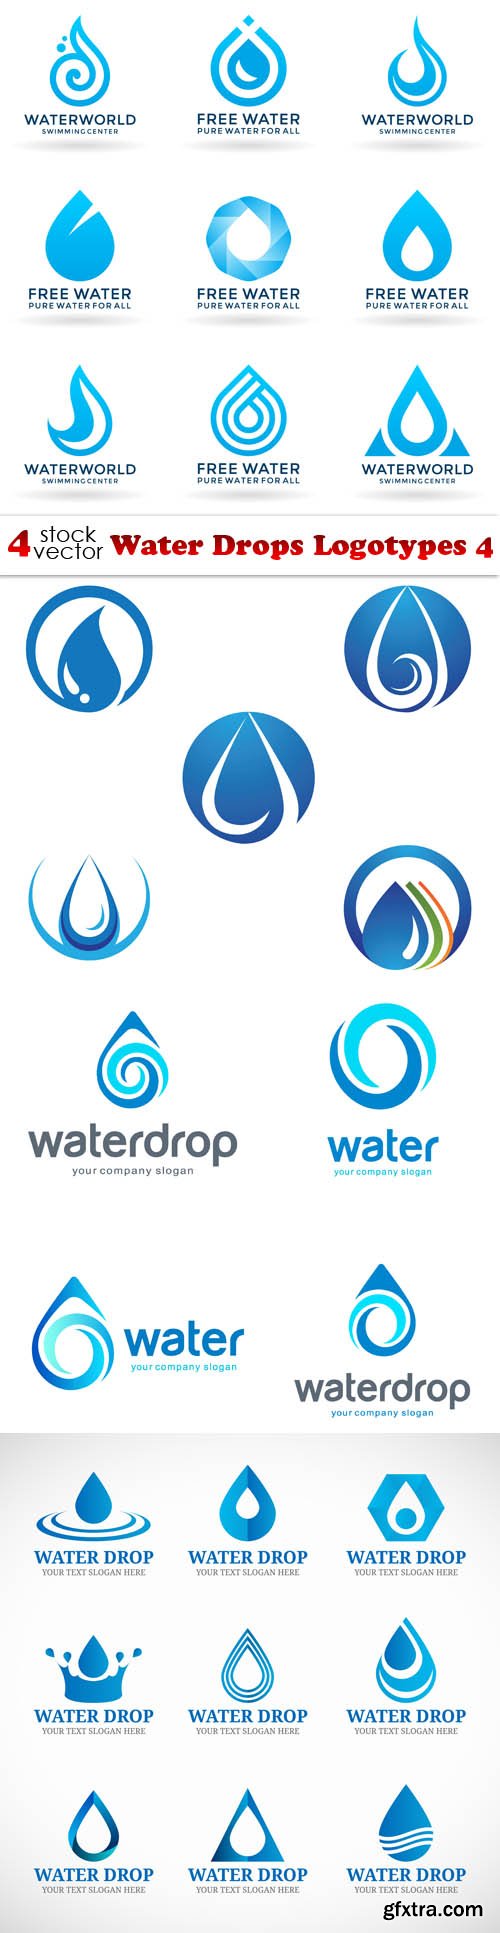 Vectors - Water Drops Logotypes 4